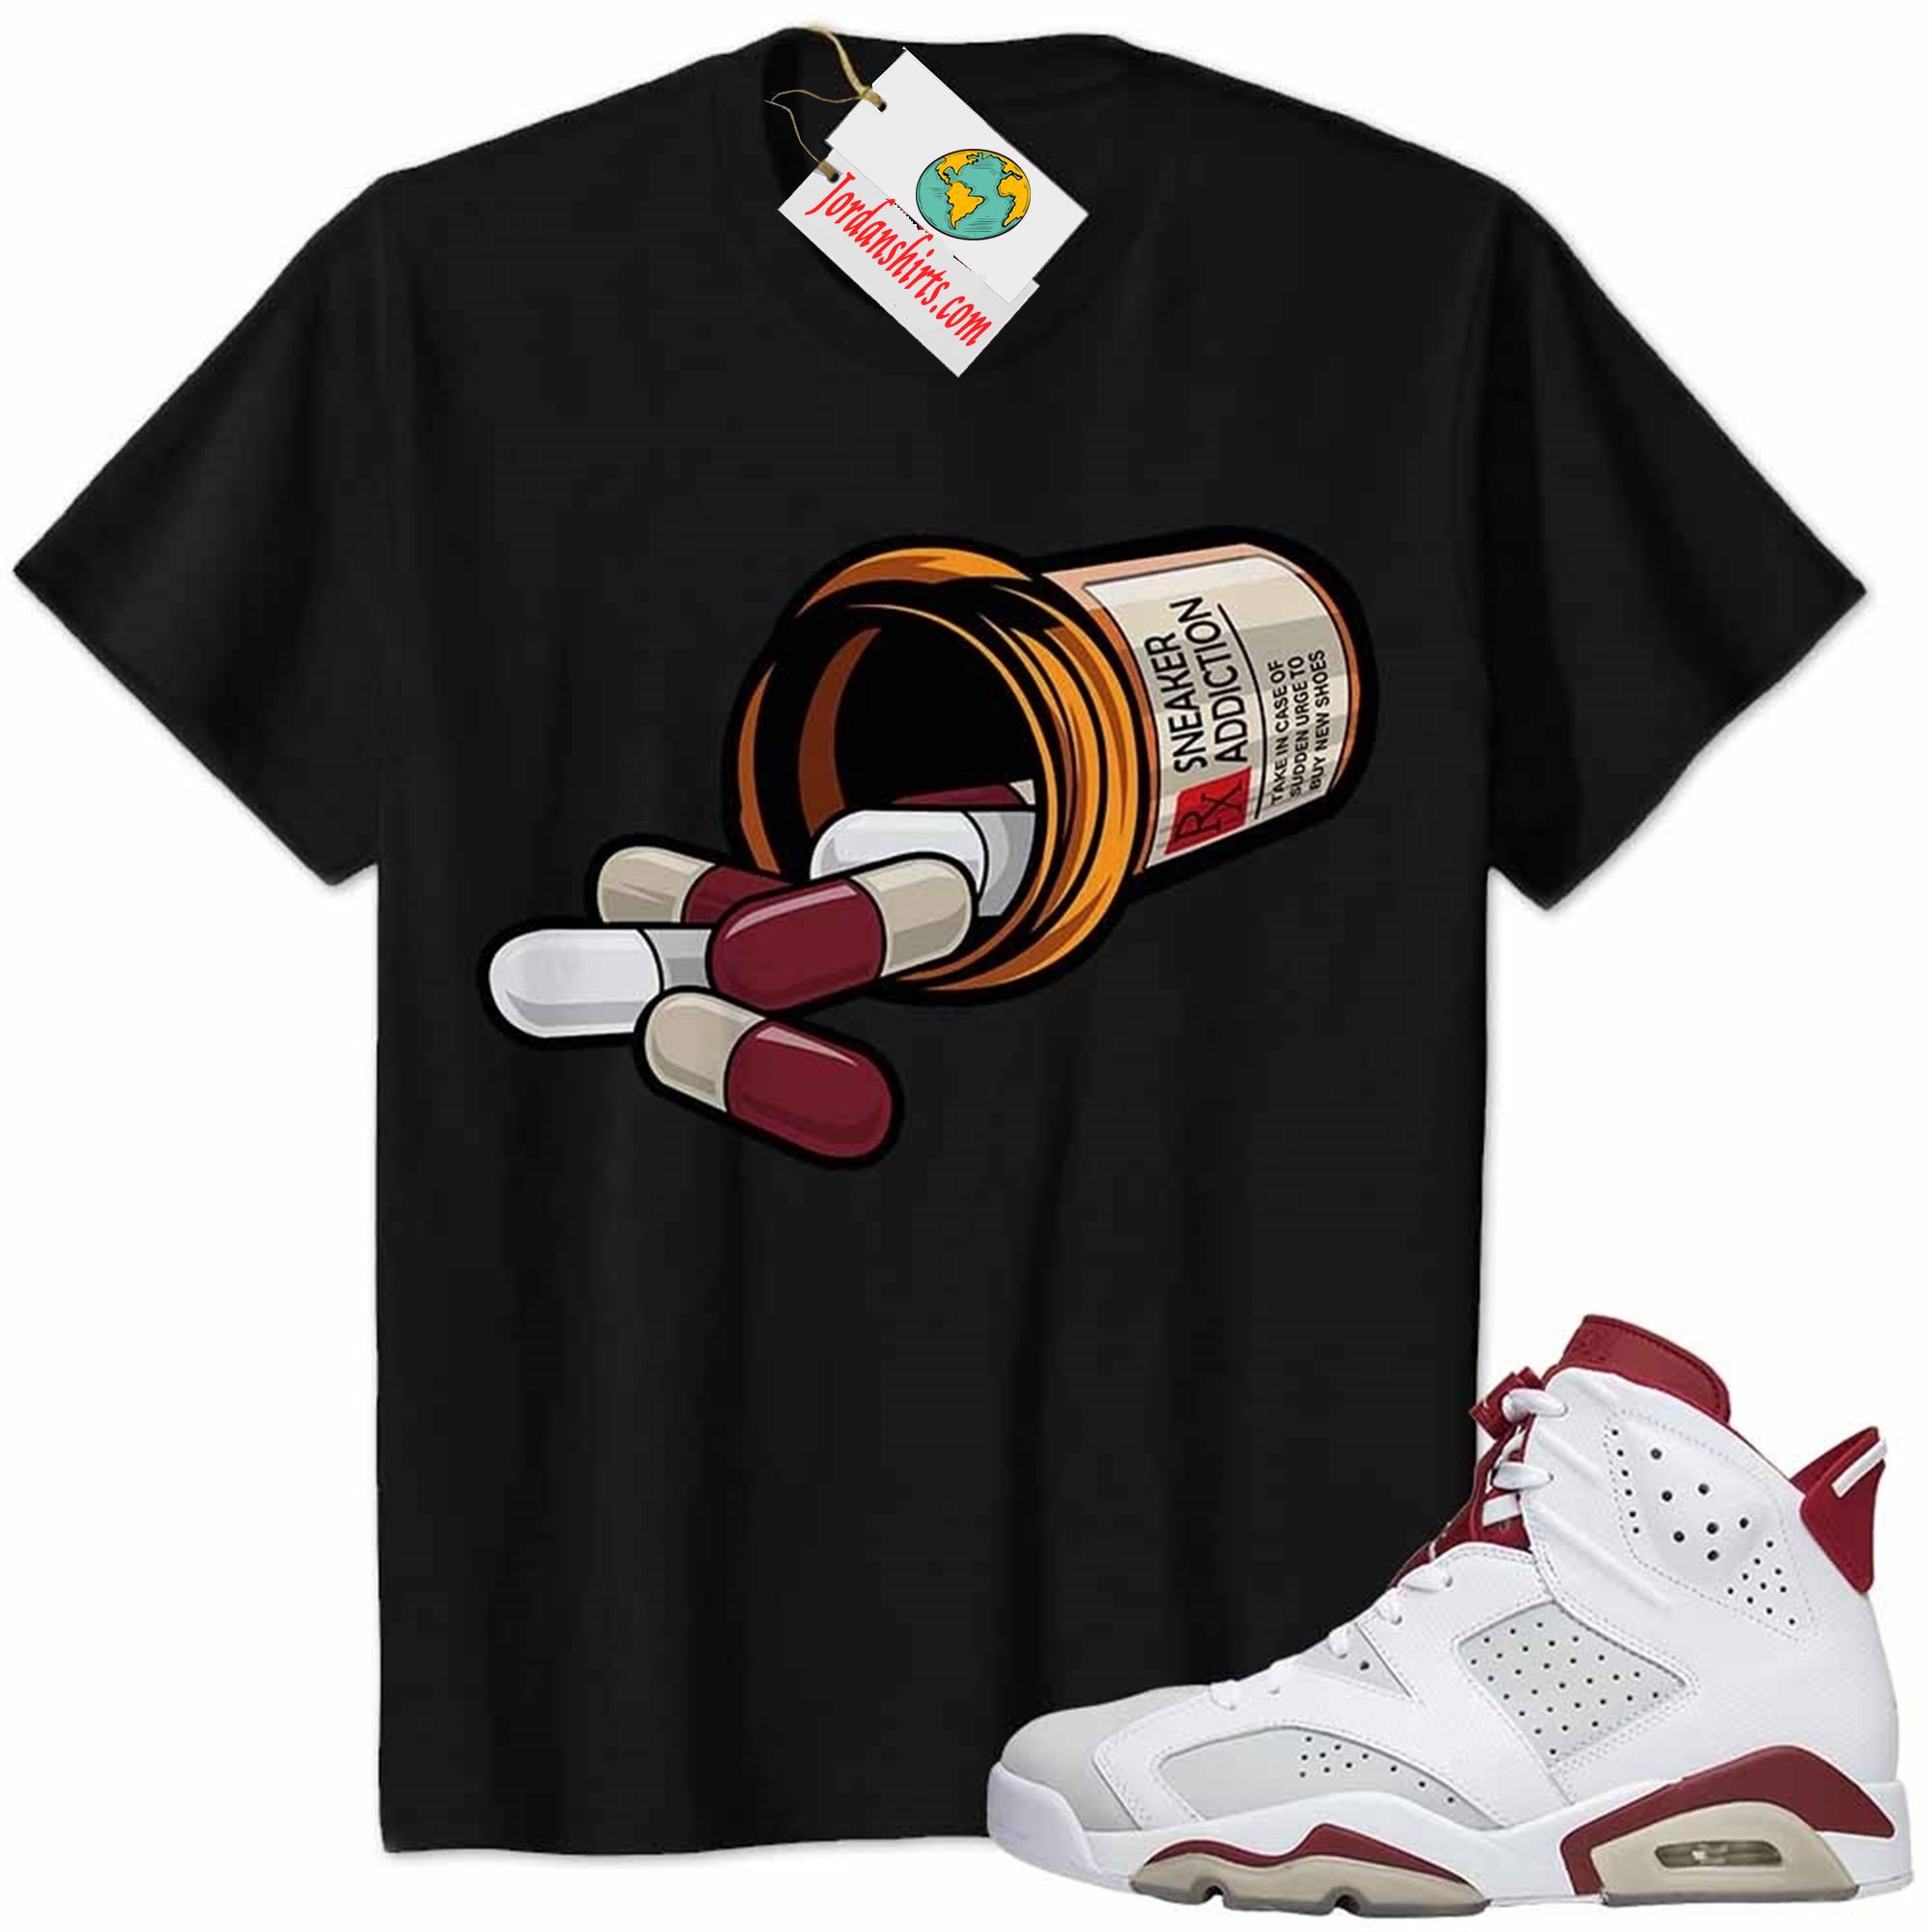 Jordan 6 Shirt, Rx Drugs Pill Bottle Sneaker Addiction Black Air Jordan 6 Alternate 6s Plus Size Up To 5xl